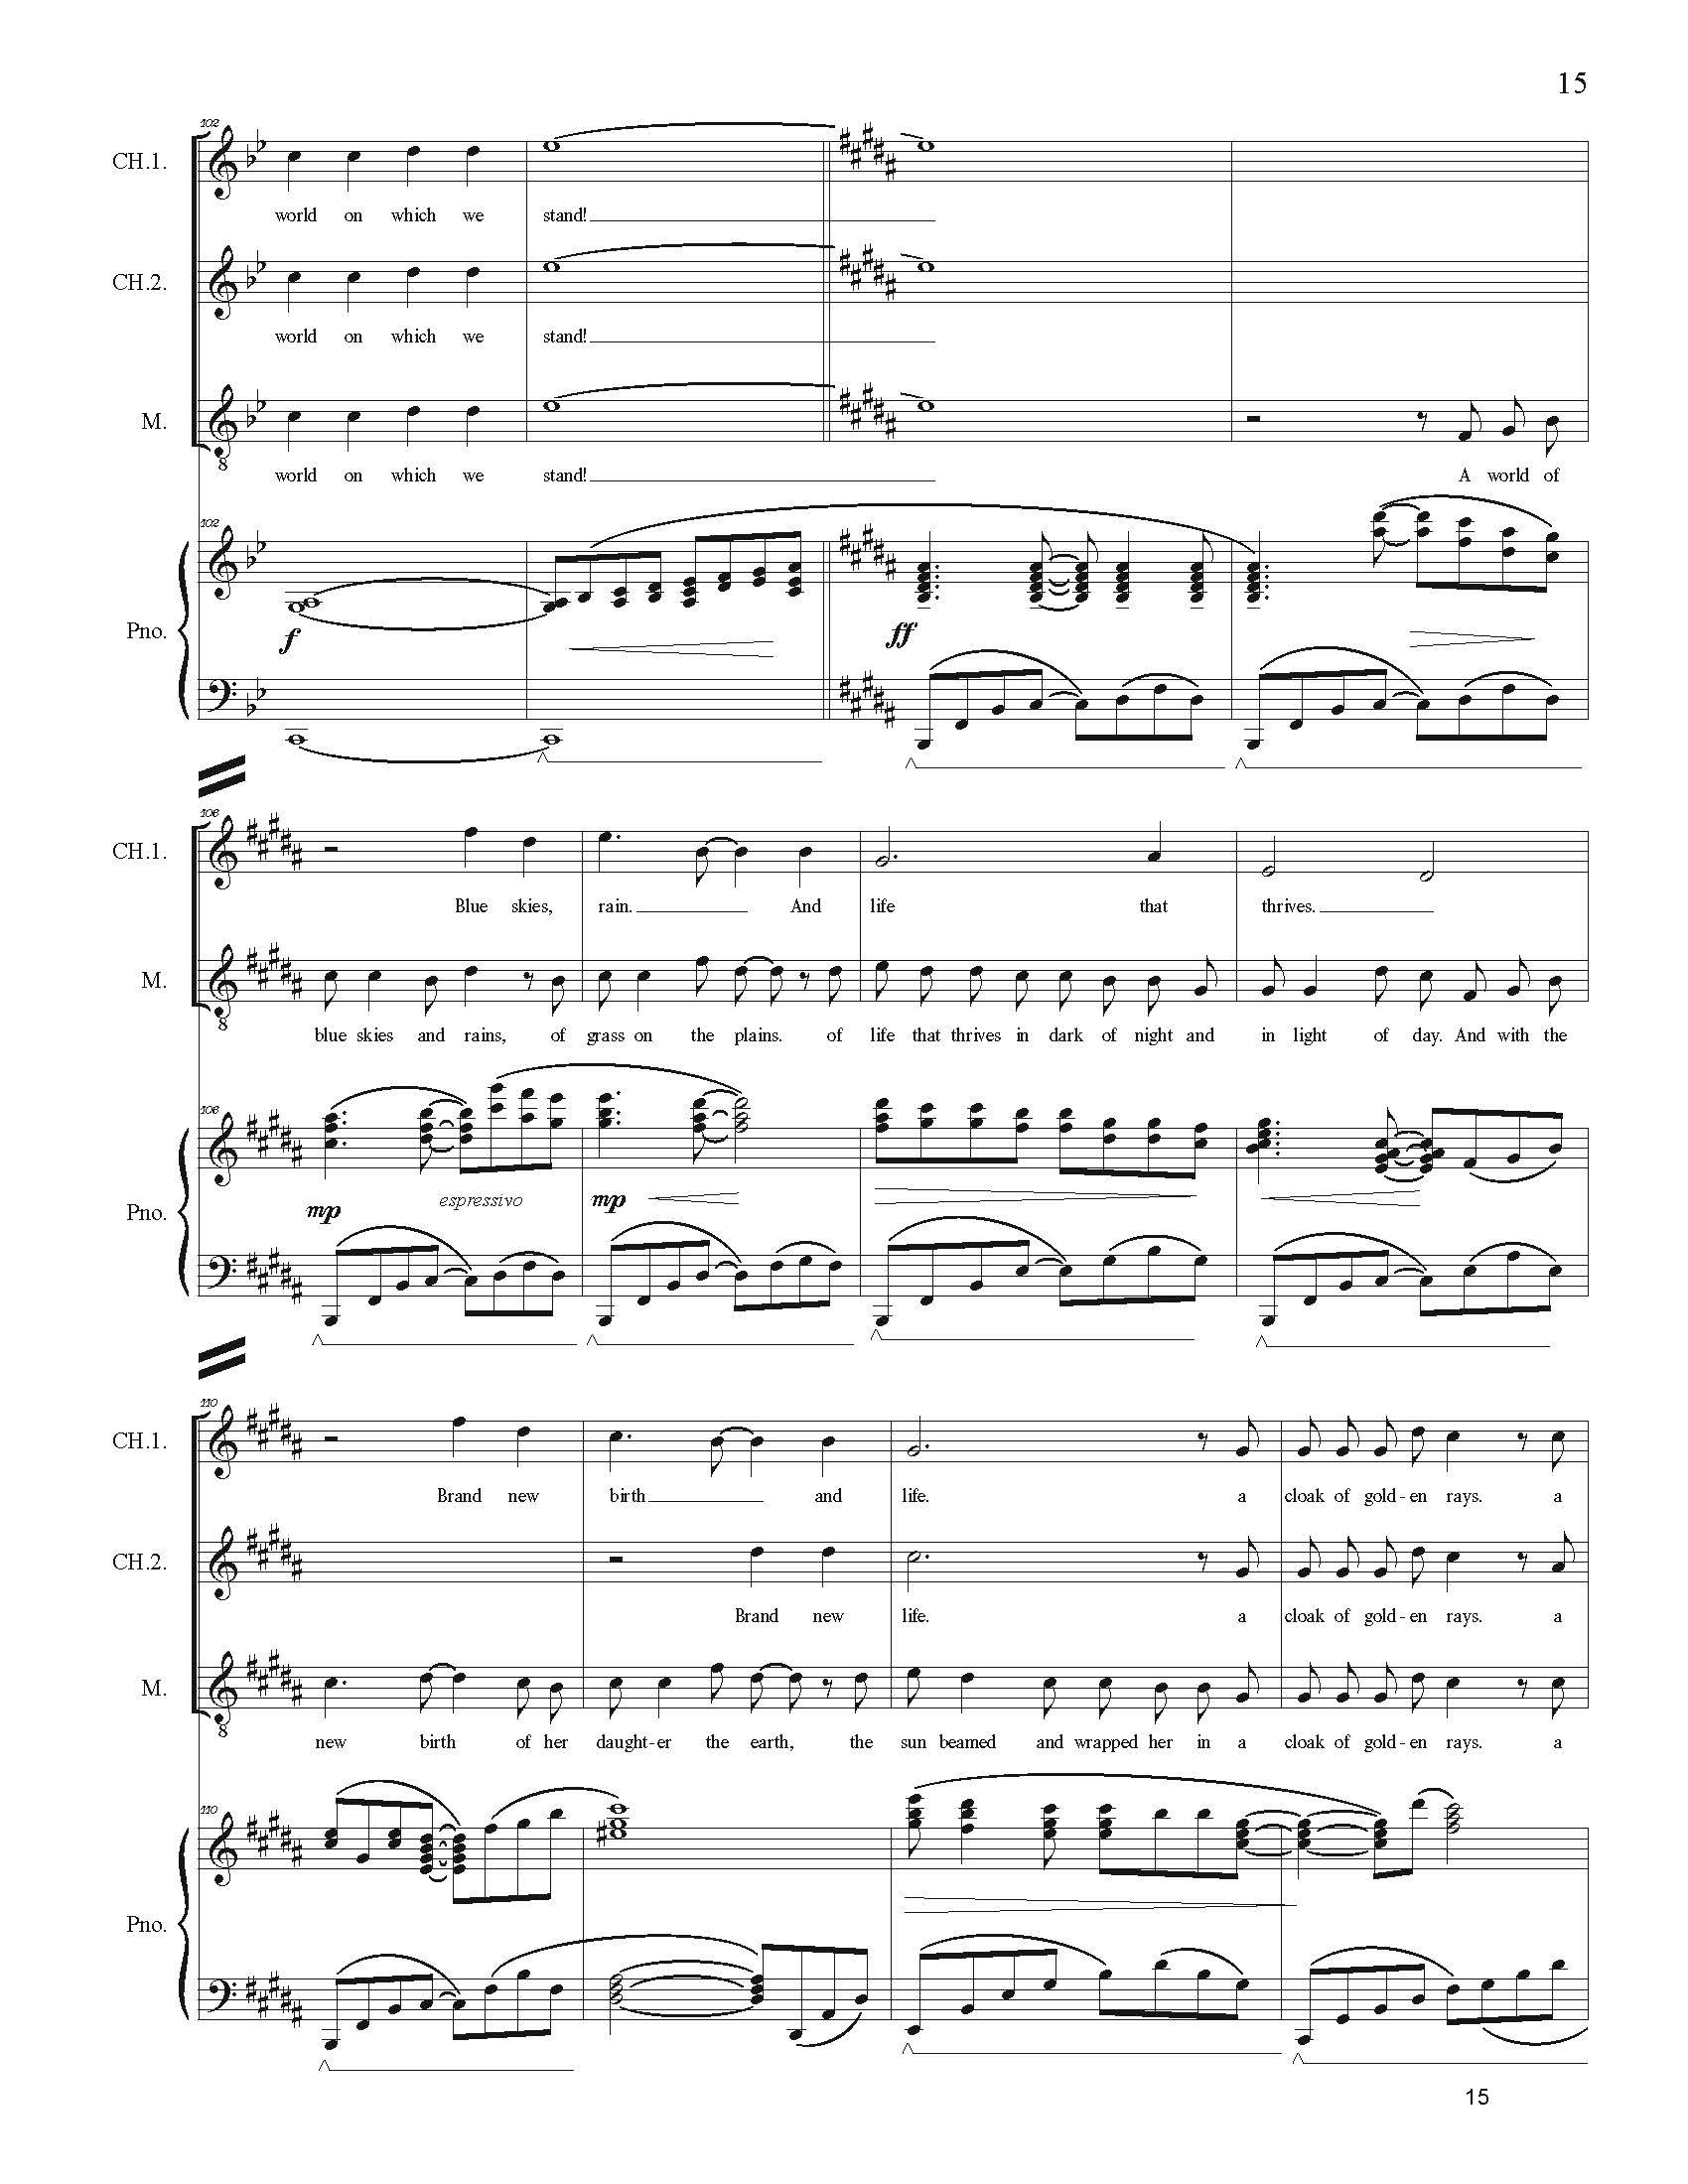 FULL PIANO VOCAL SCORE DRAFT 1 - Score_Page_015.jpg